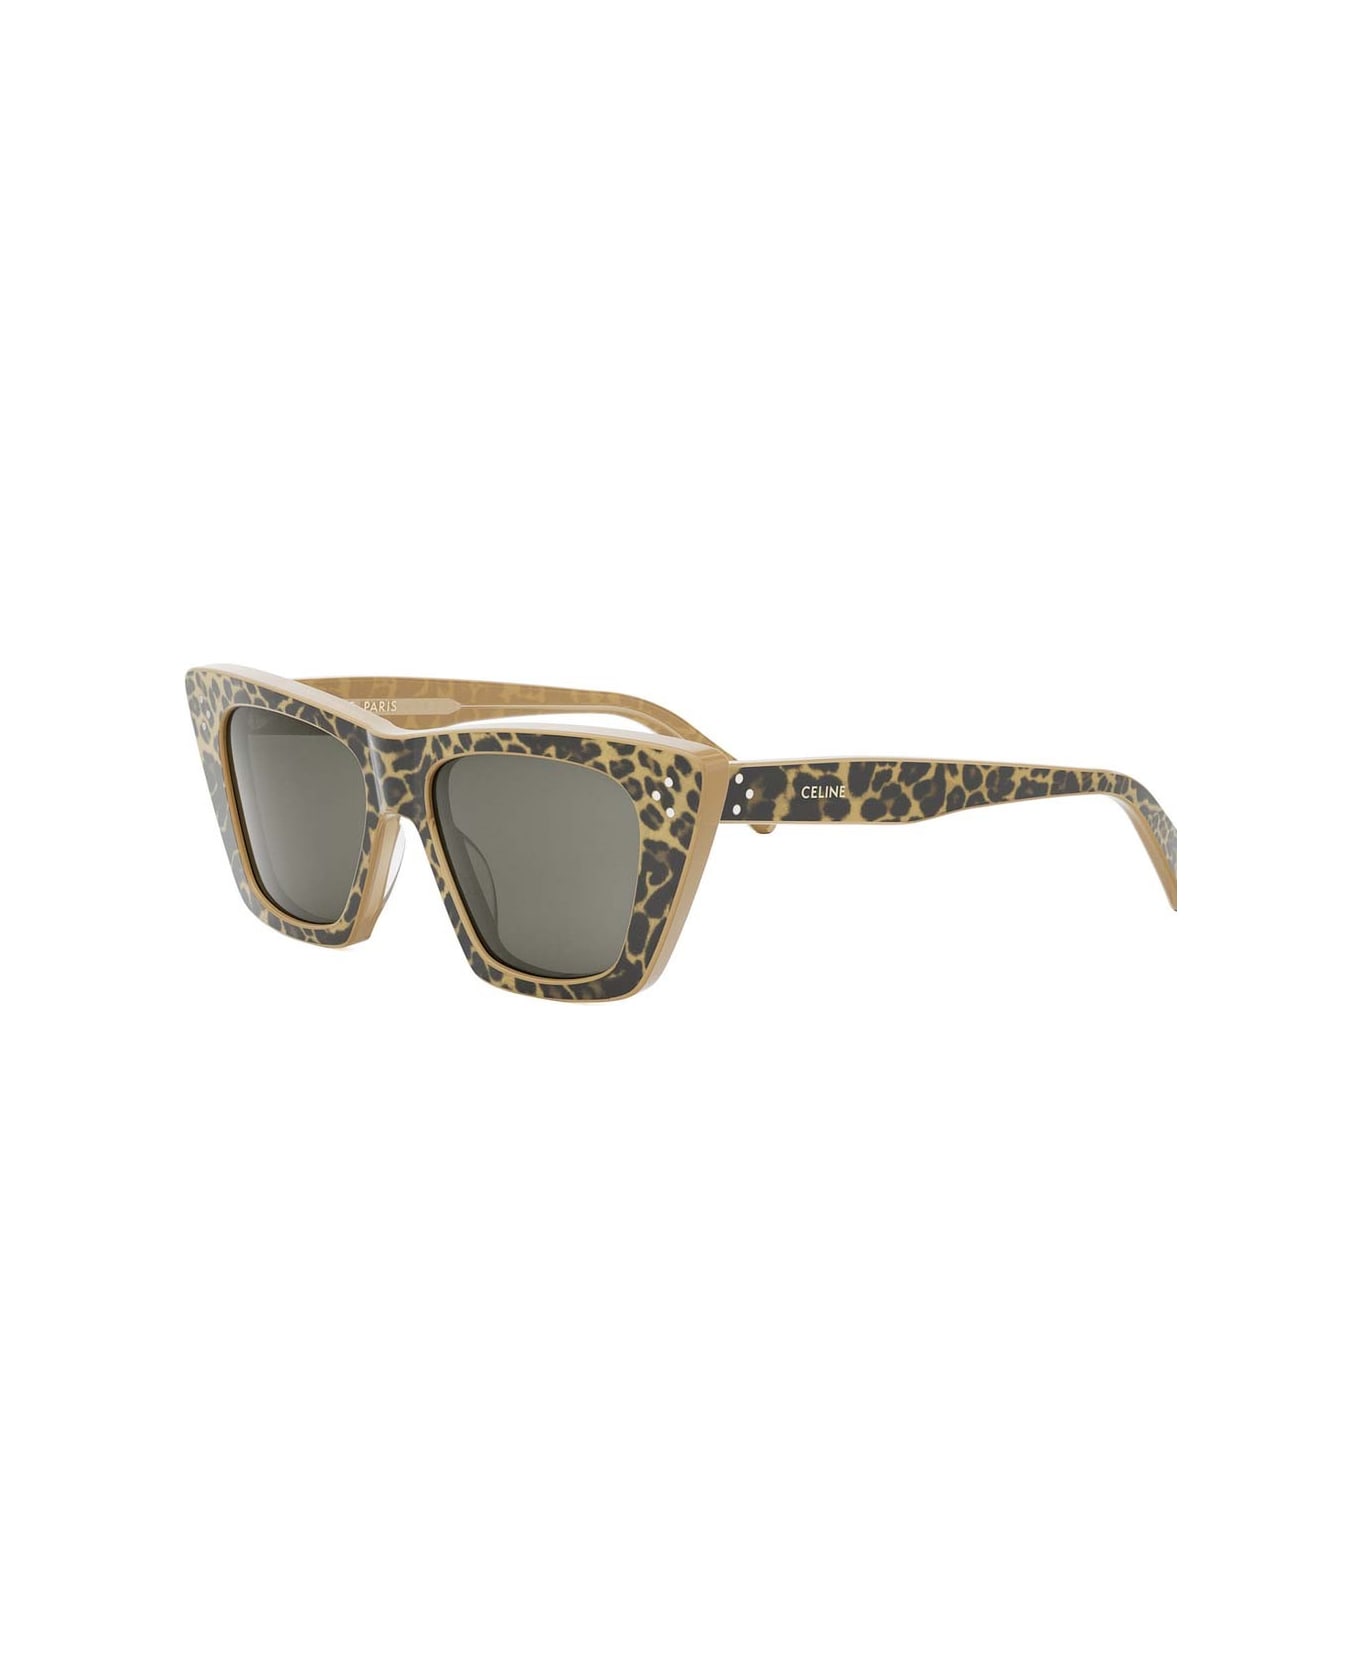 Celine Sunglasses - Leopardato/Oro/Grigio サングラス